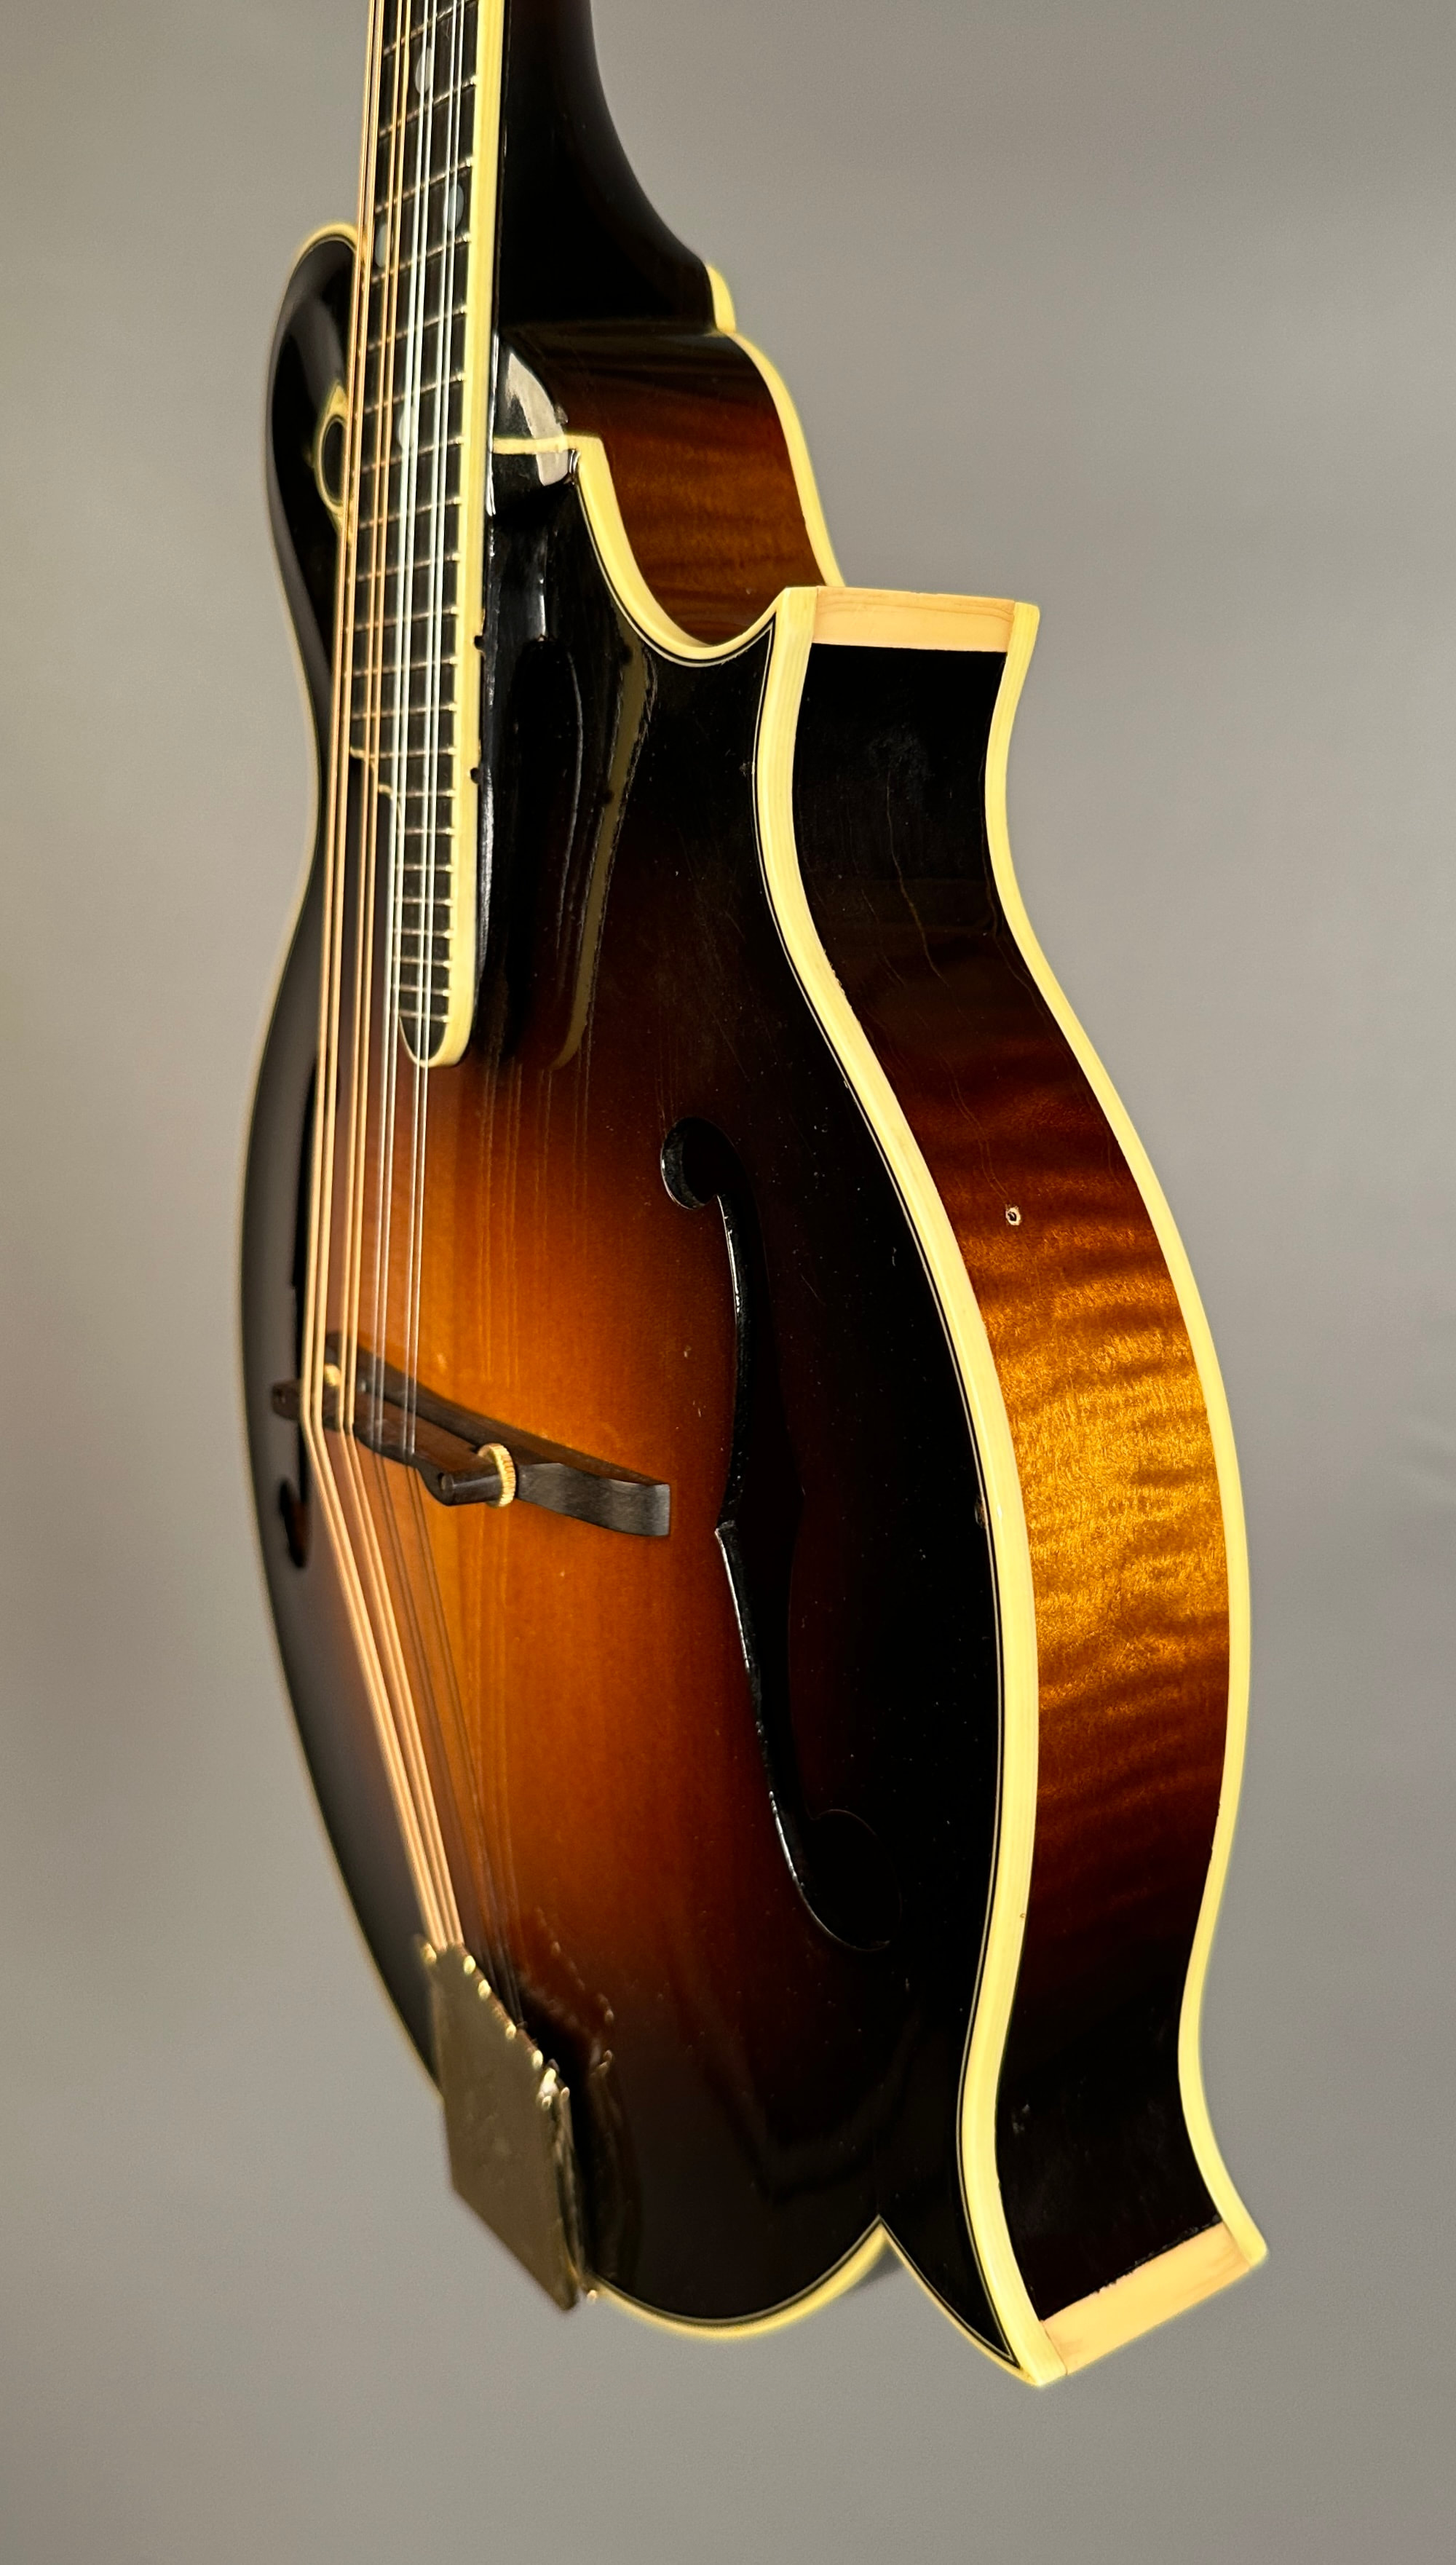 Classic Sunburst F-Style Mandolin Model Miniature Guitar Replica